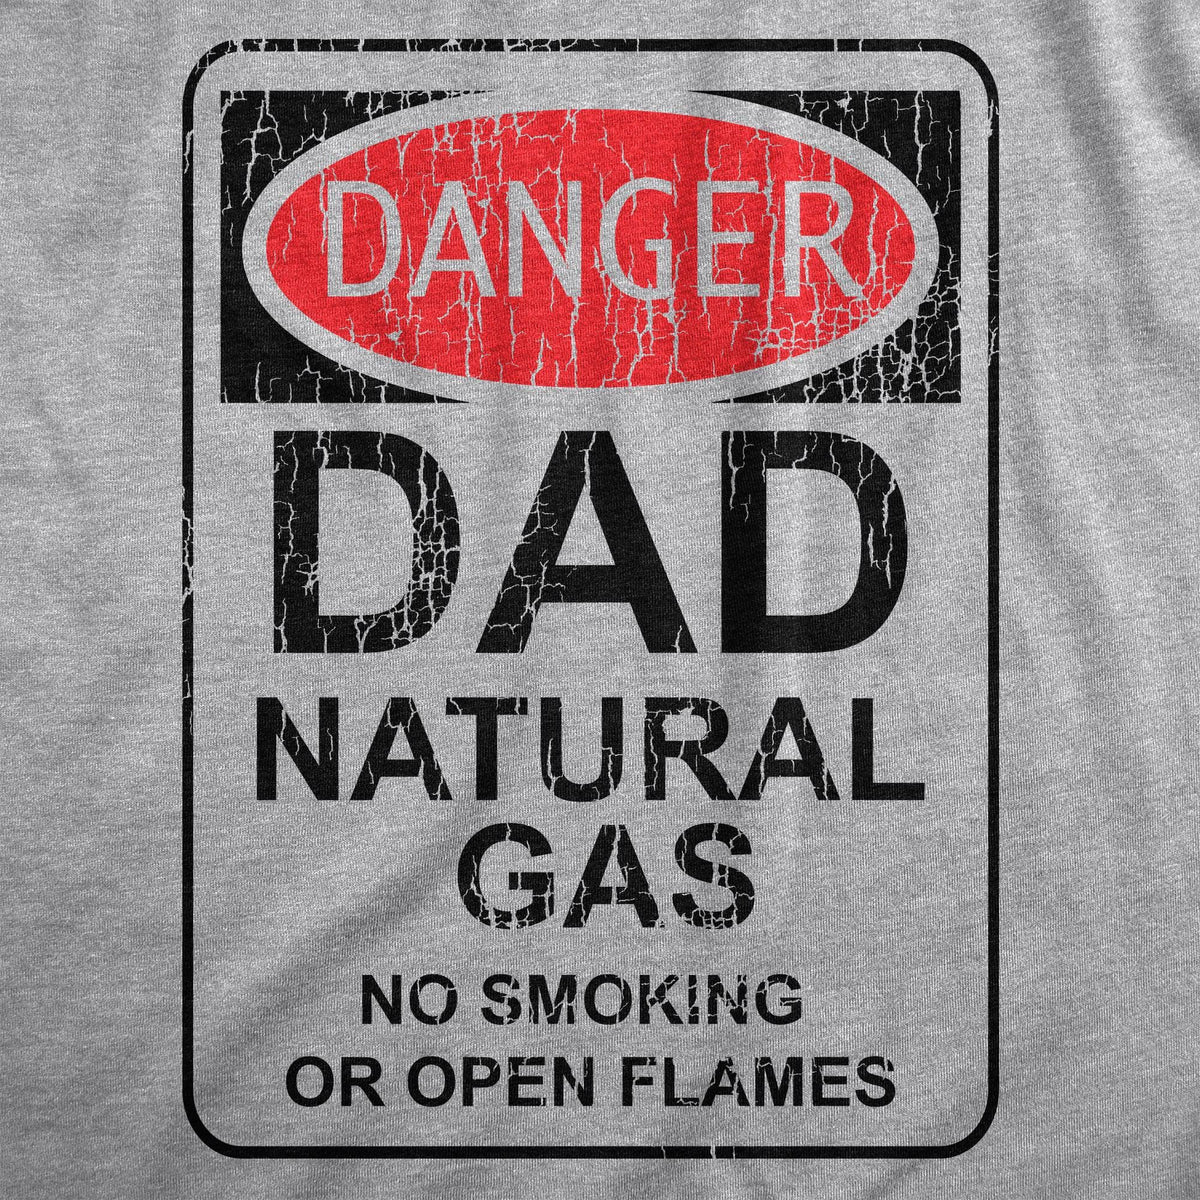 Danger Dad Natural Gas Men&#39;s Tshirt  -  Crazy Dog T-Shirts